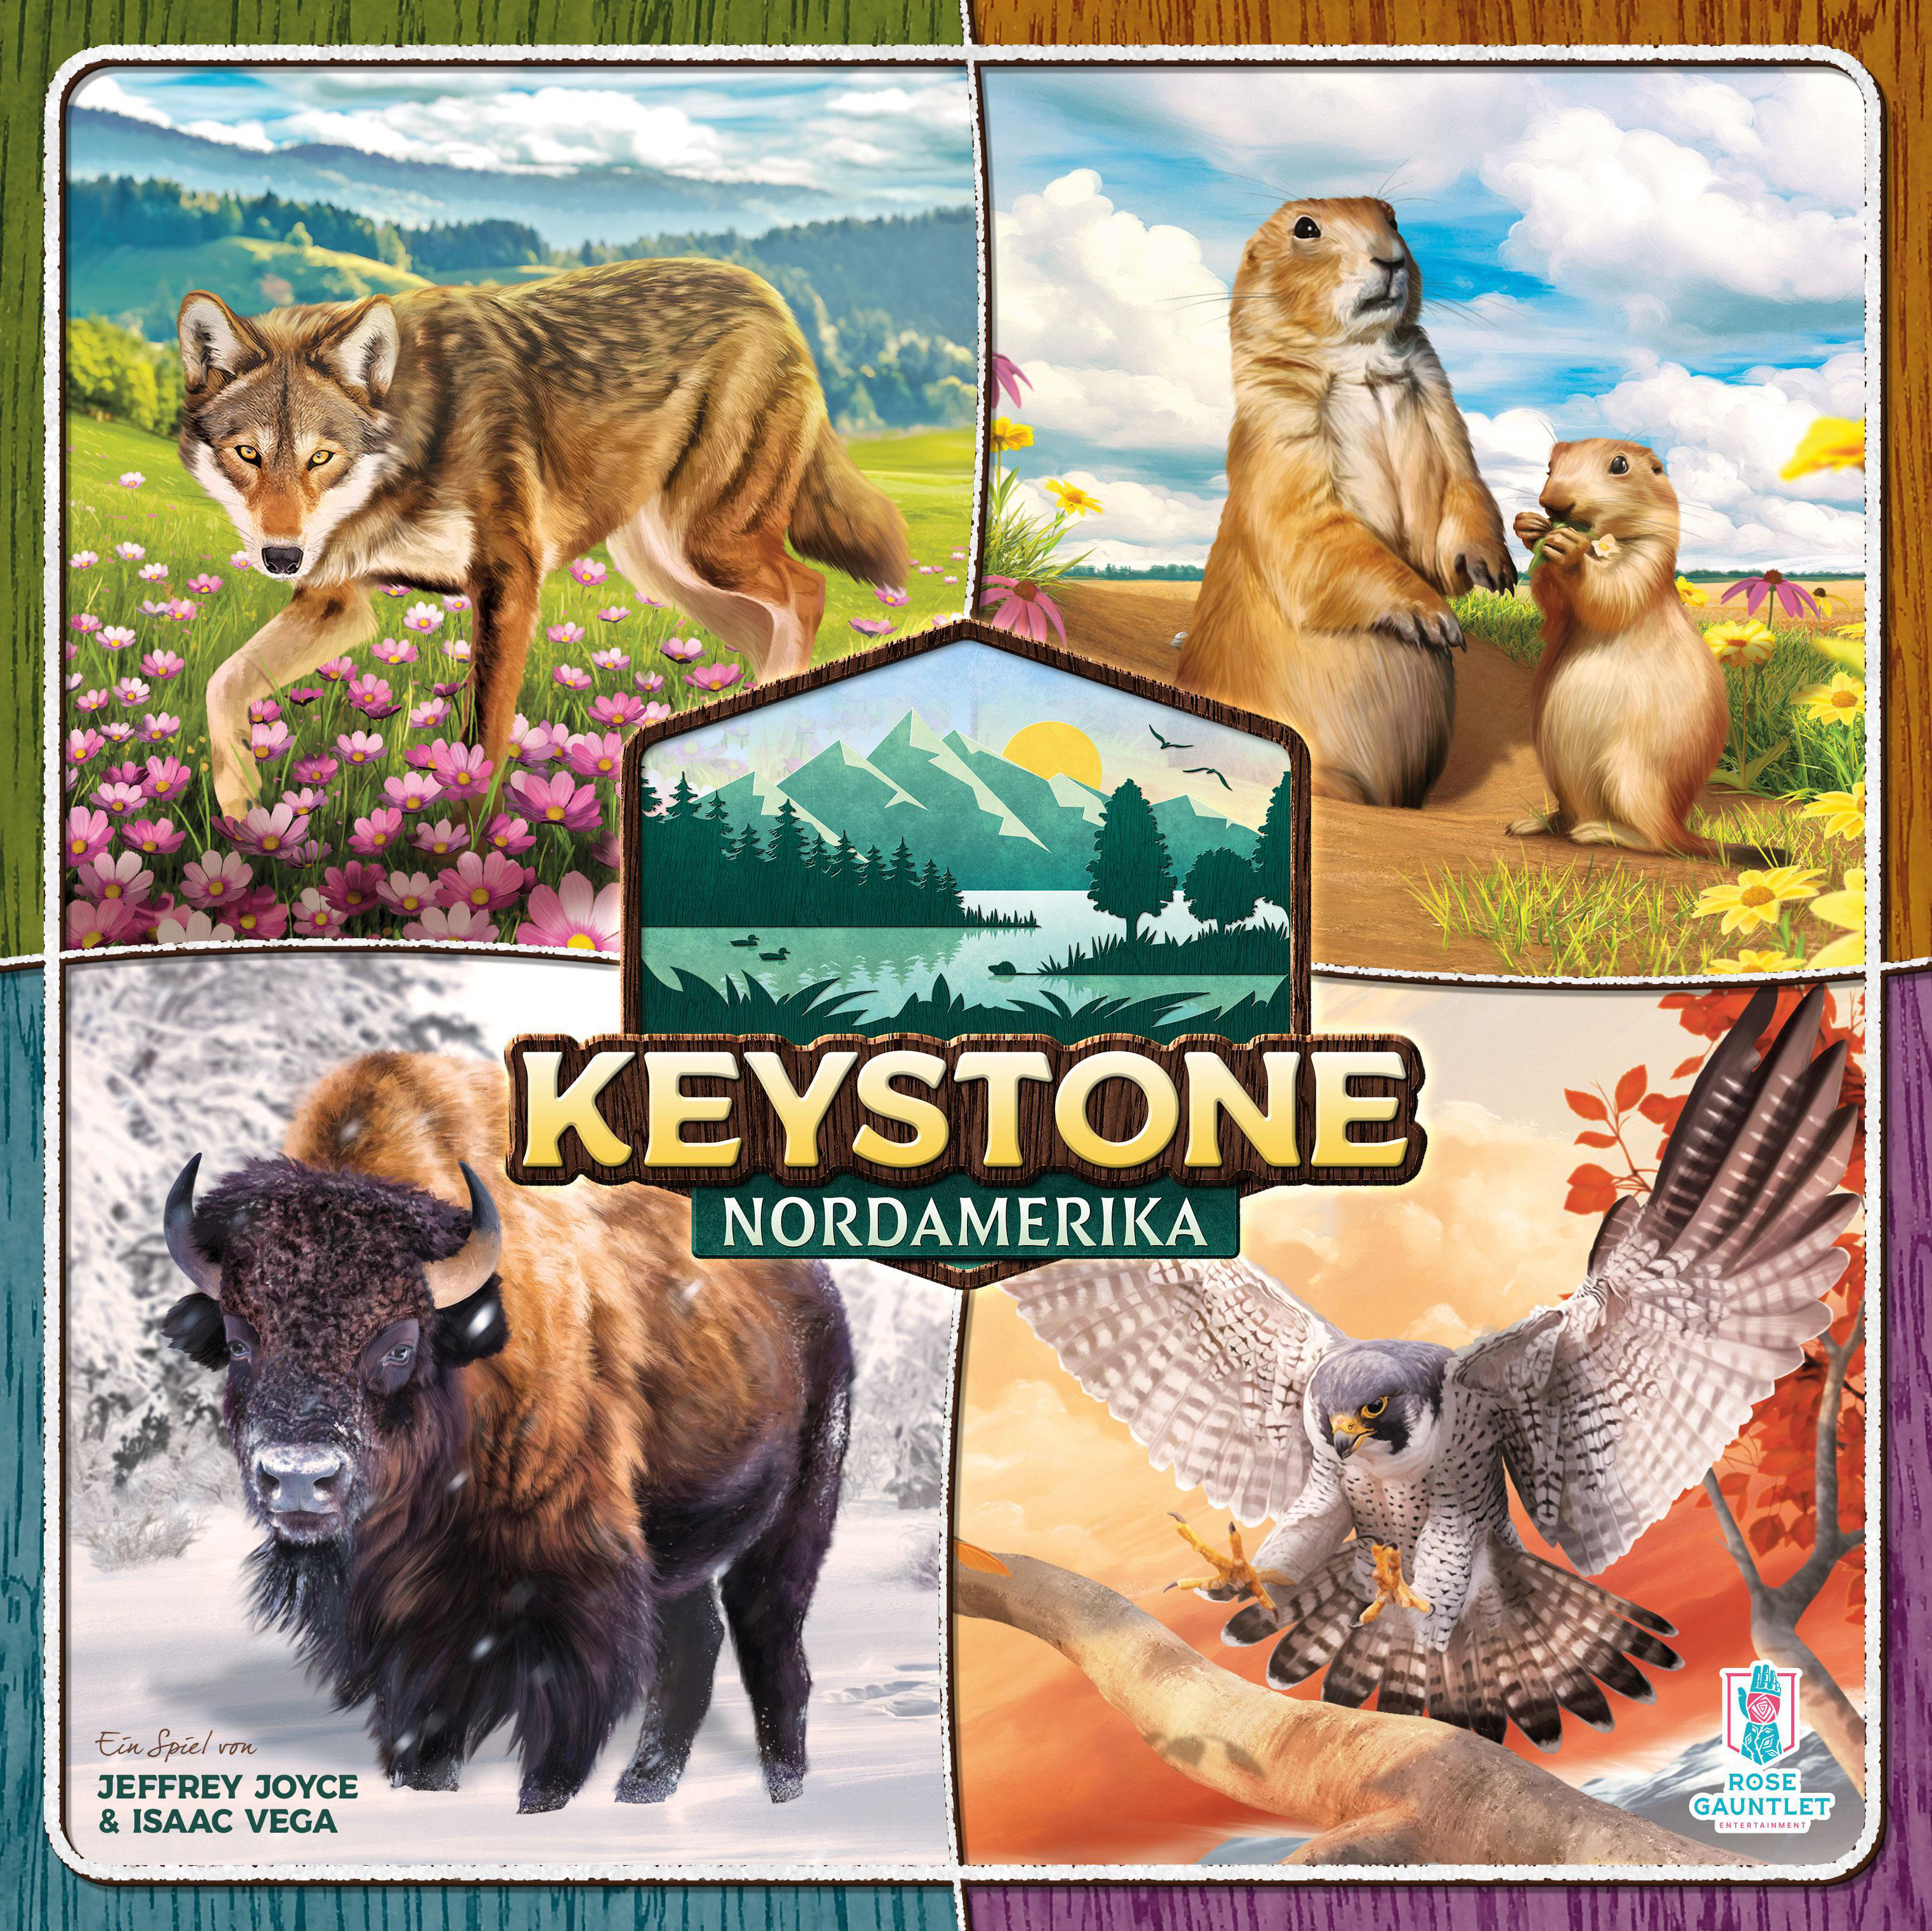 ROSE GAUNTLET Keystone Nordamerika Mehrfarbig Brettspiel